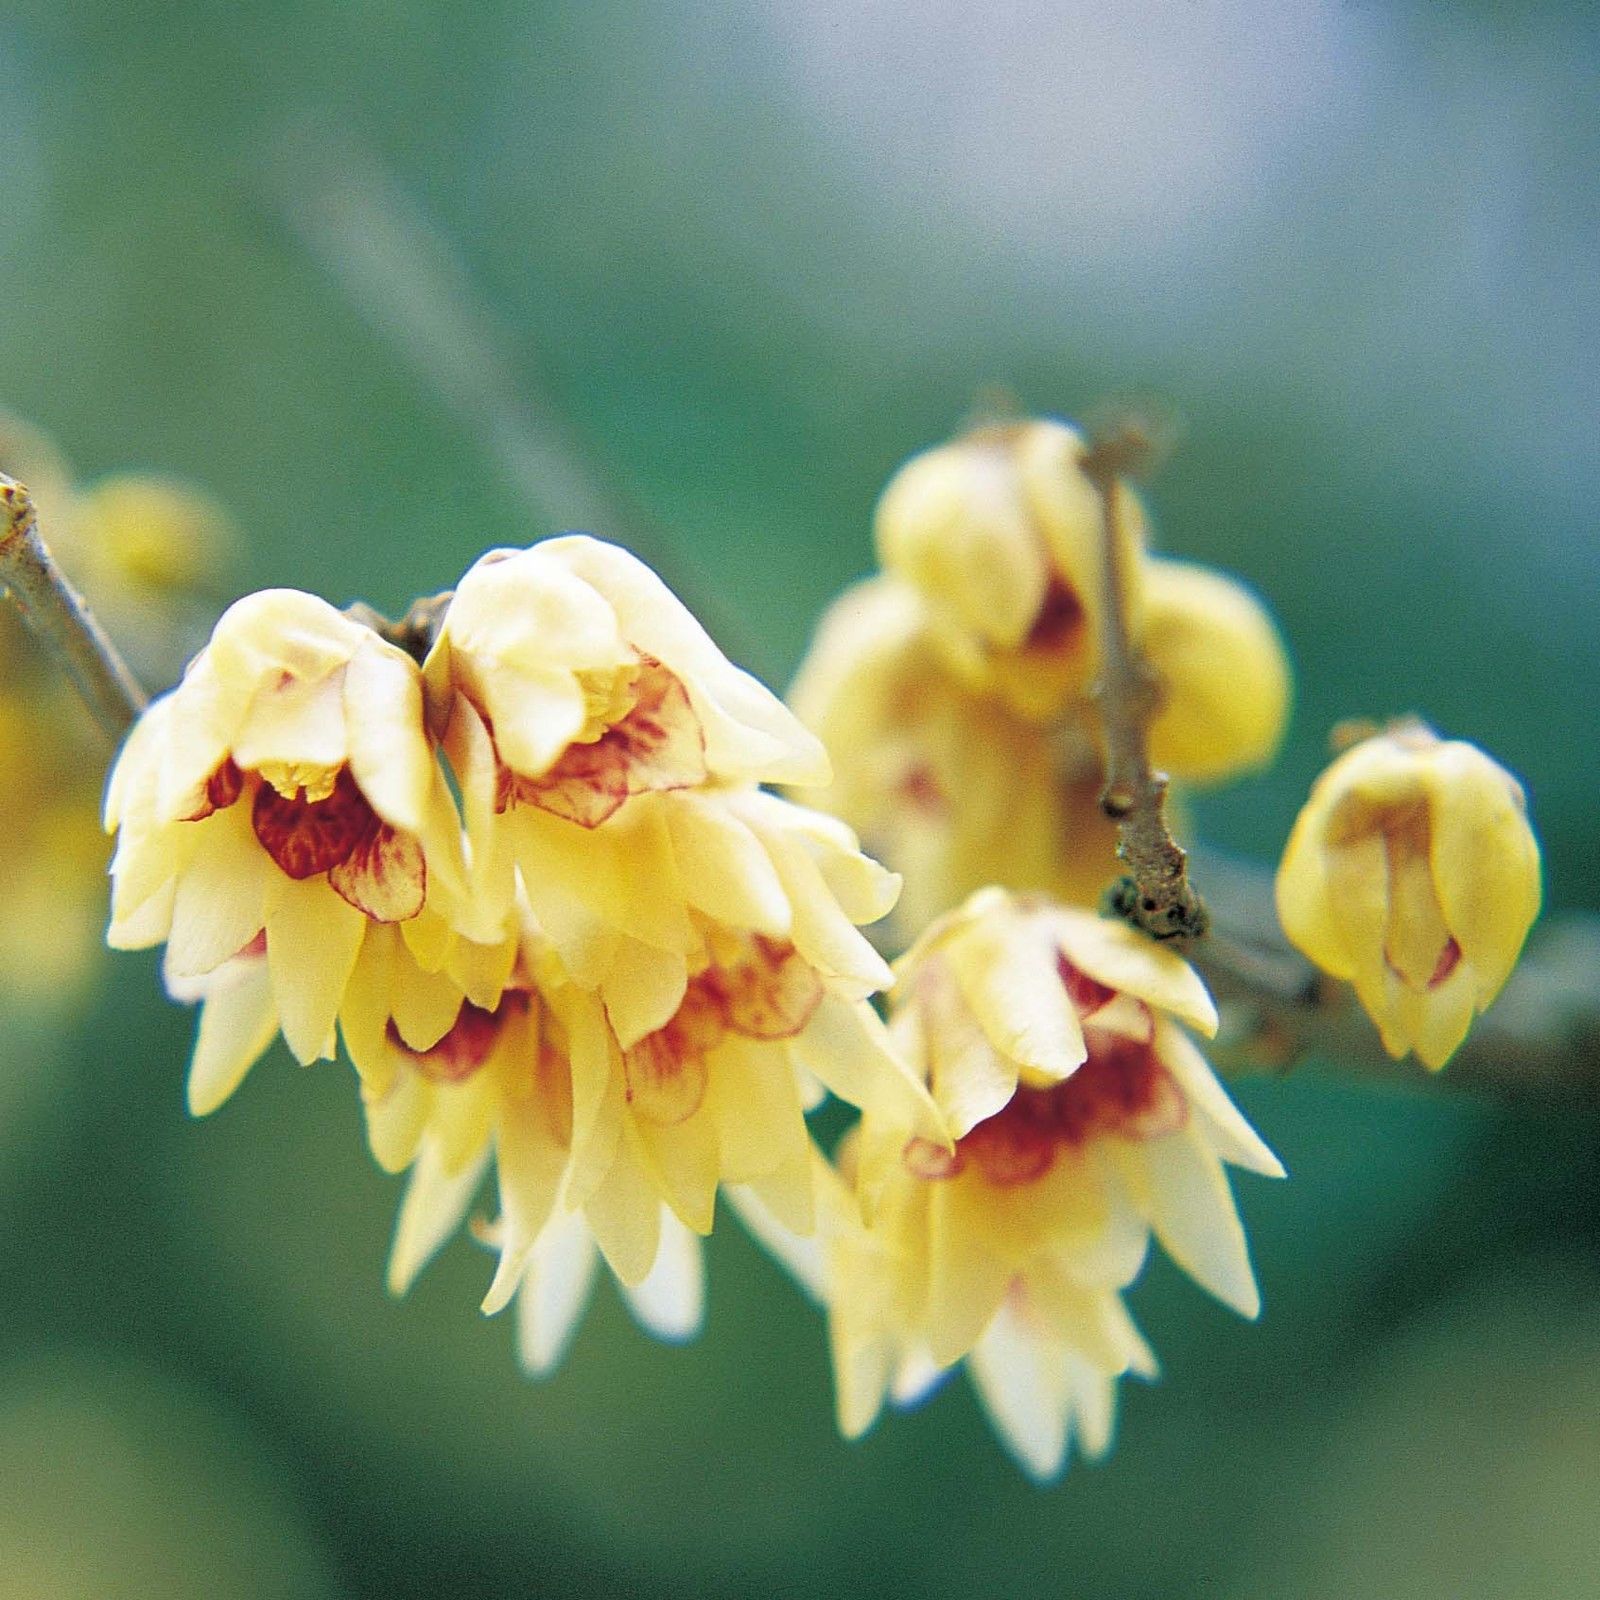 Fragrant Wintersweet Shrub, Chimonanthus praecox, Seeds - $8.99 - $16.77